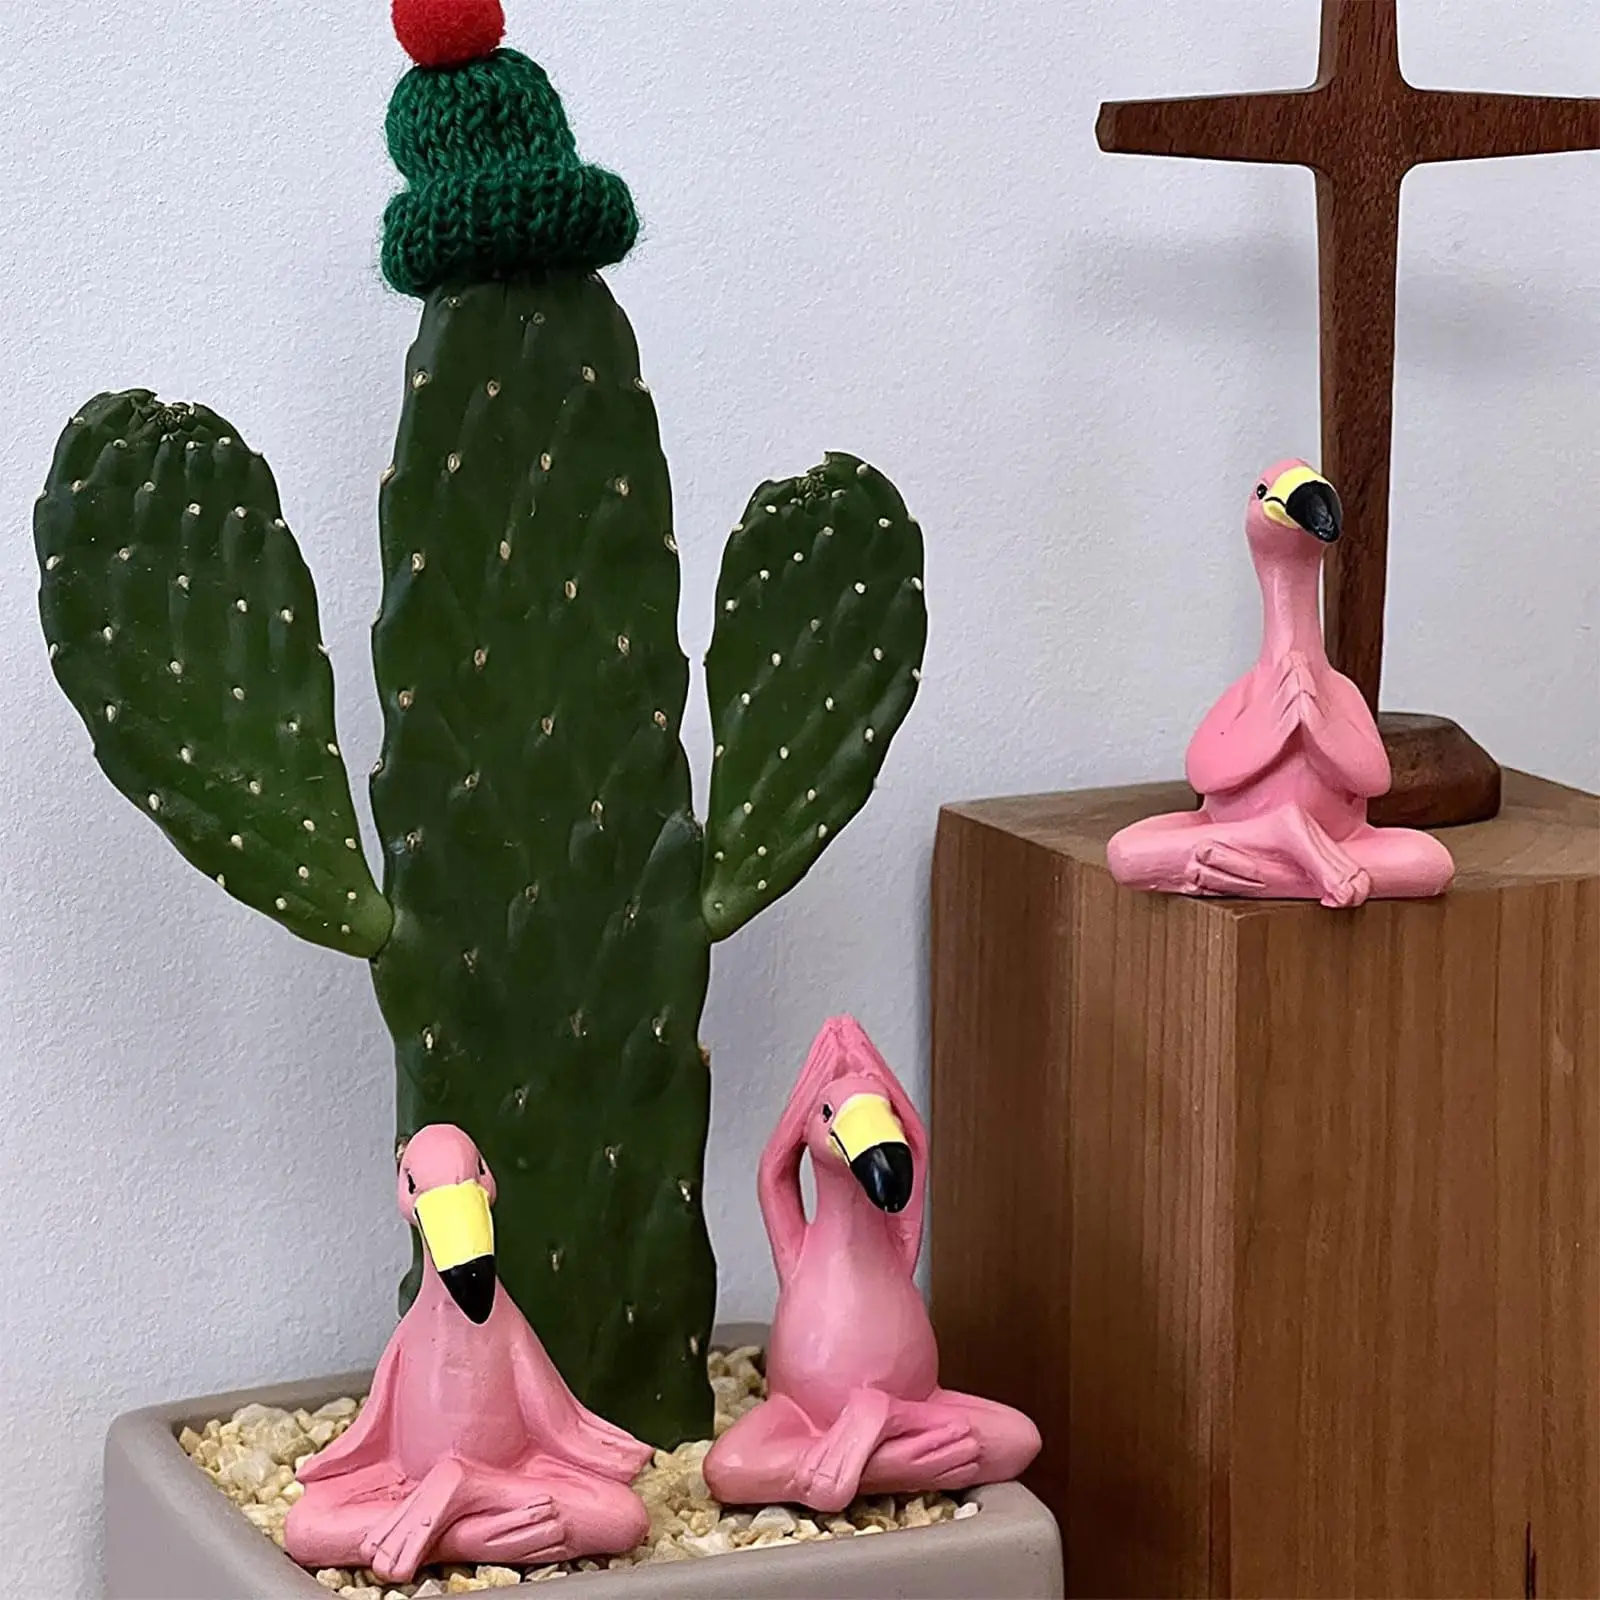 

3 Pieces Flamingo Figures Pink Decorative Crafts for Outdoor Garden Unique Tabletop Yoga Room Ornament Decors Statue Ornaments